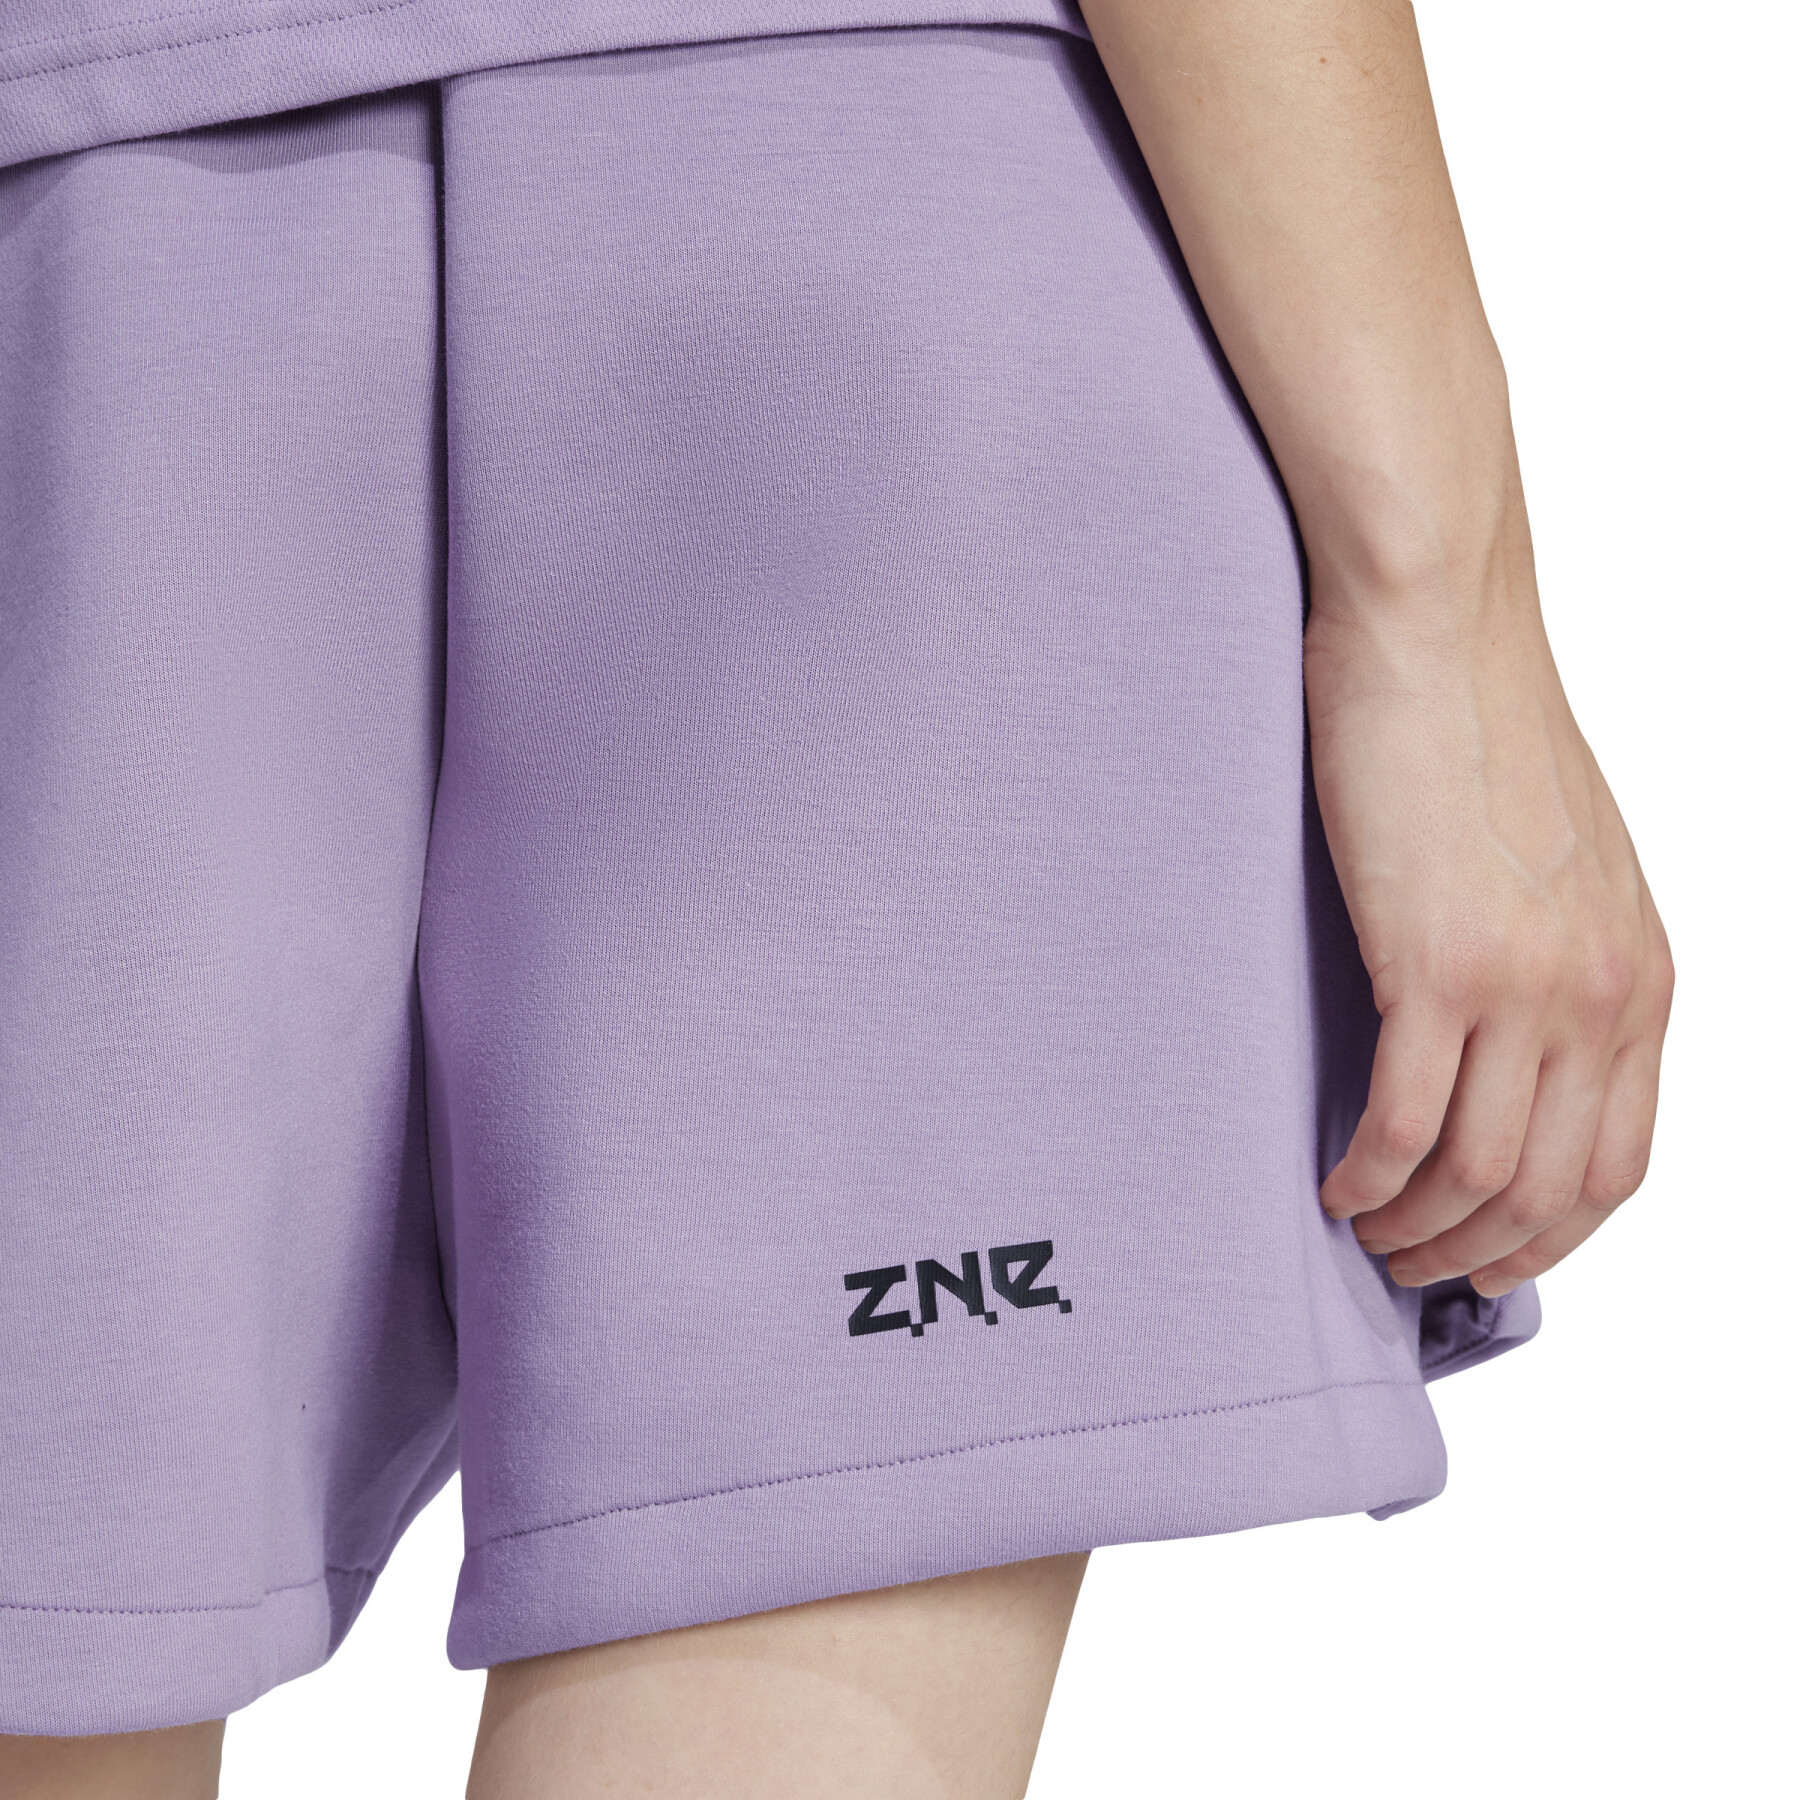 Shorts adidas Z.N.E.